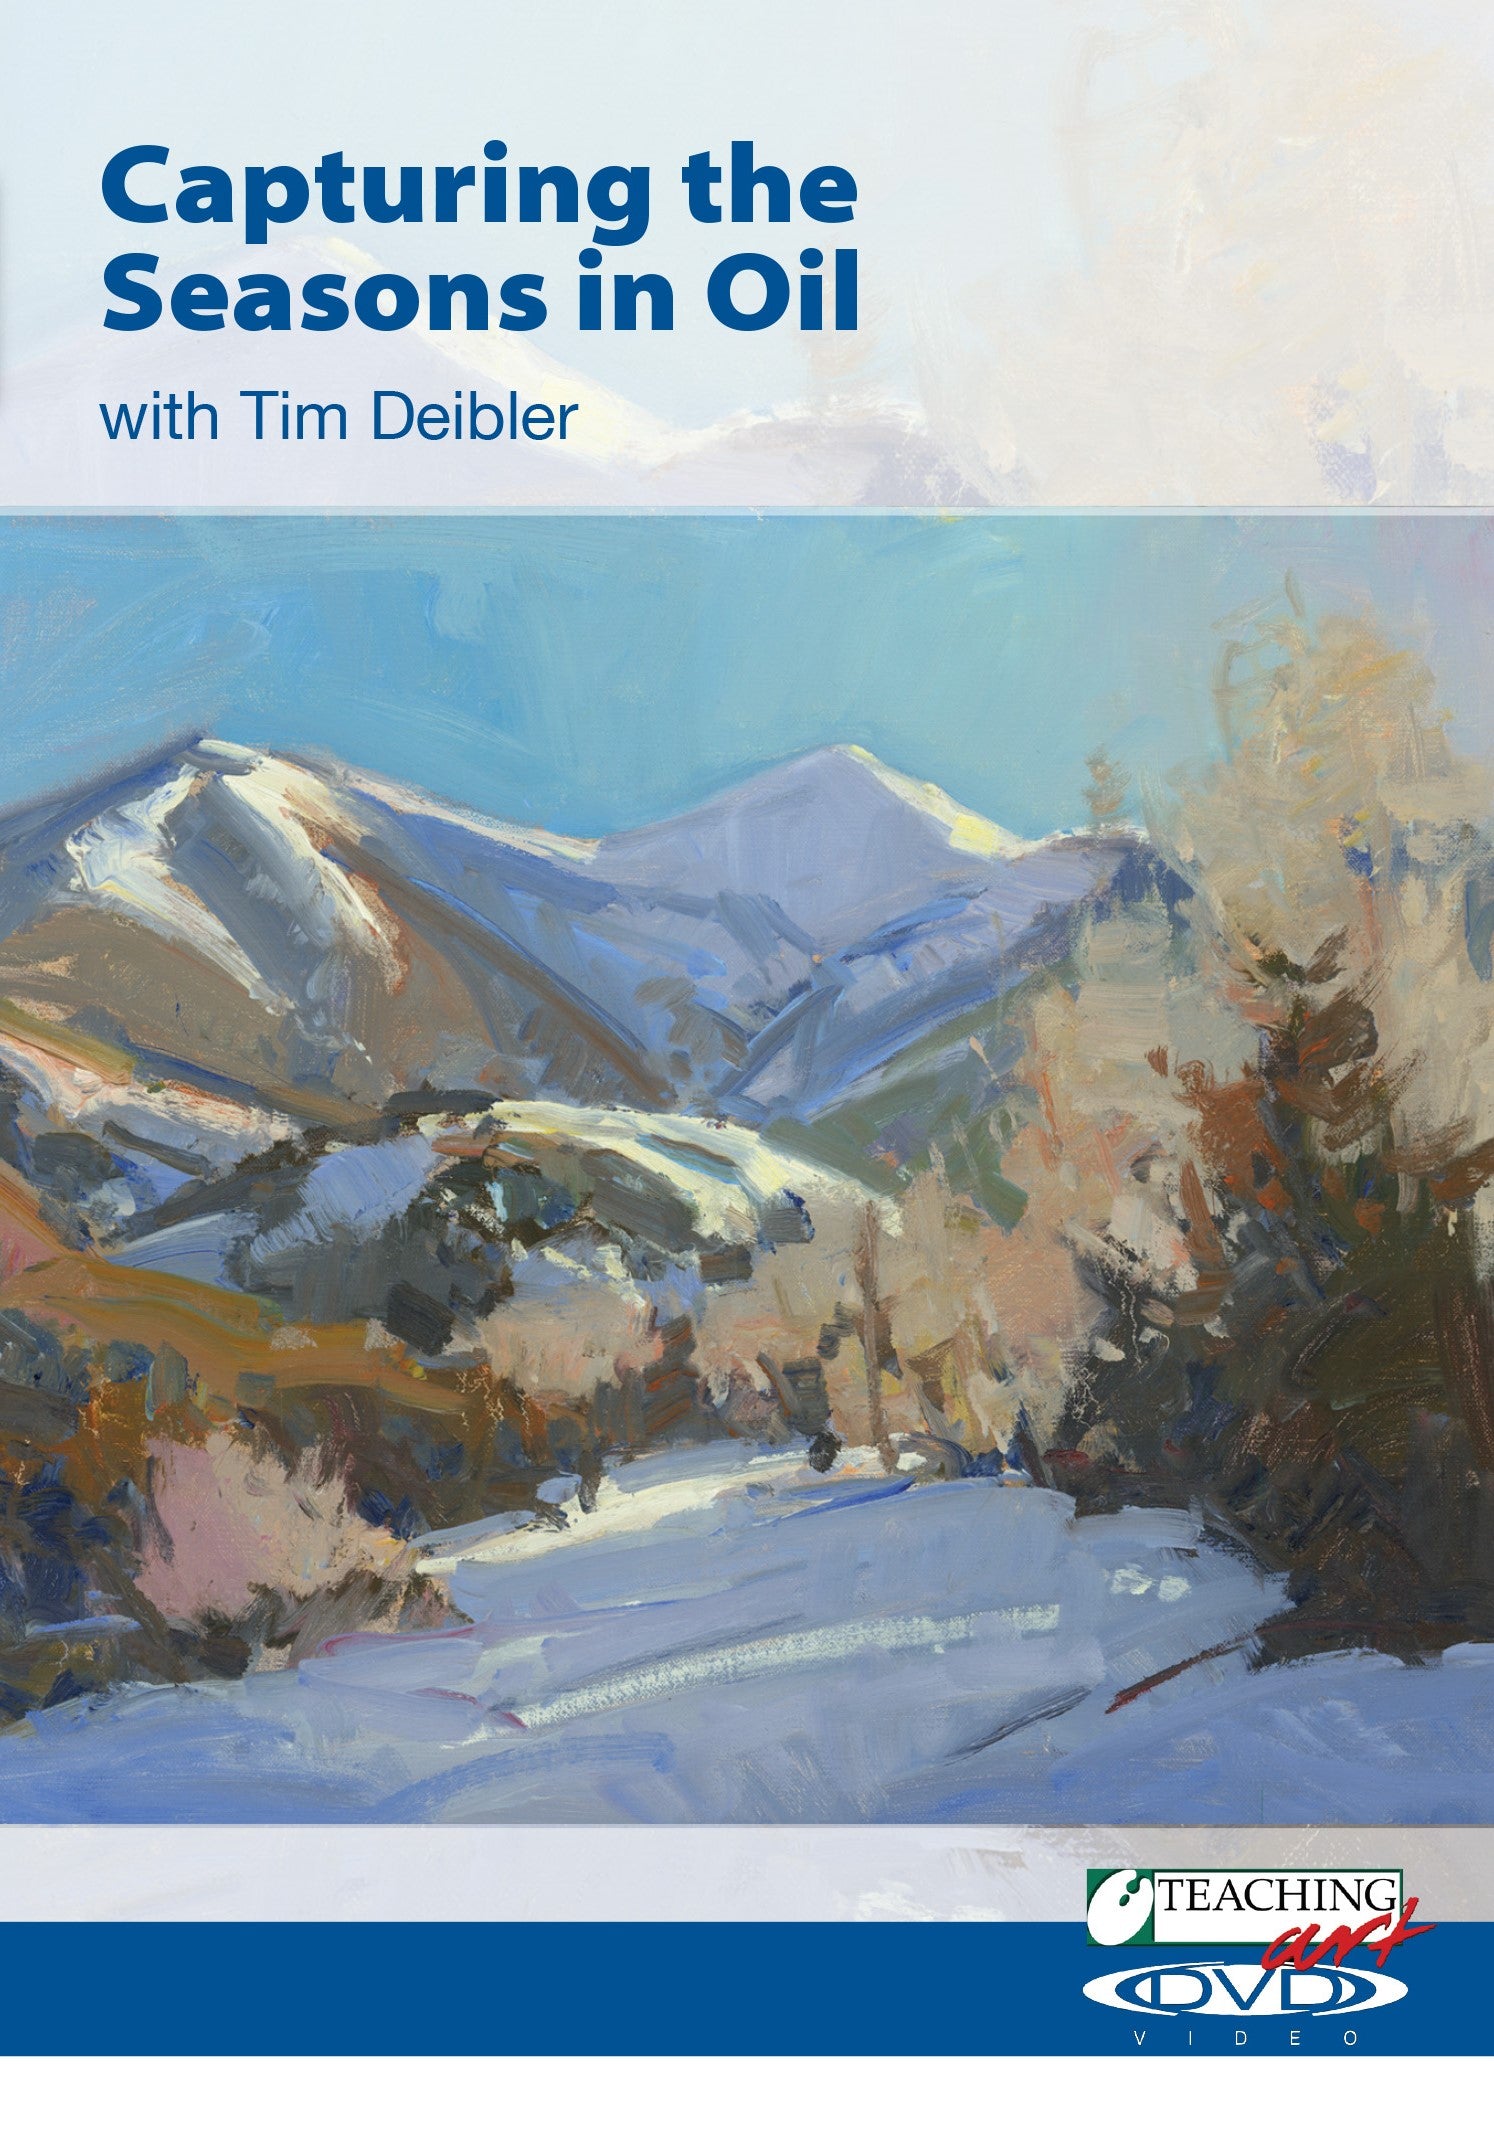 Tim Deibler: Capturing the Seasons in Oil